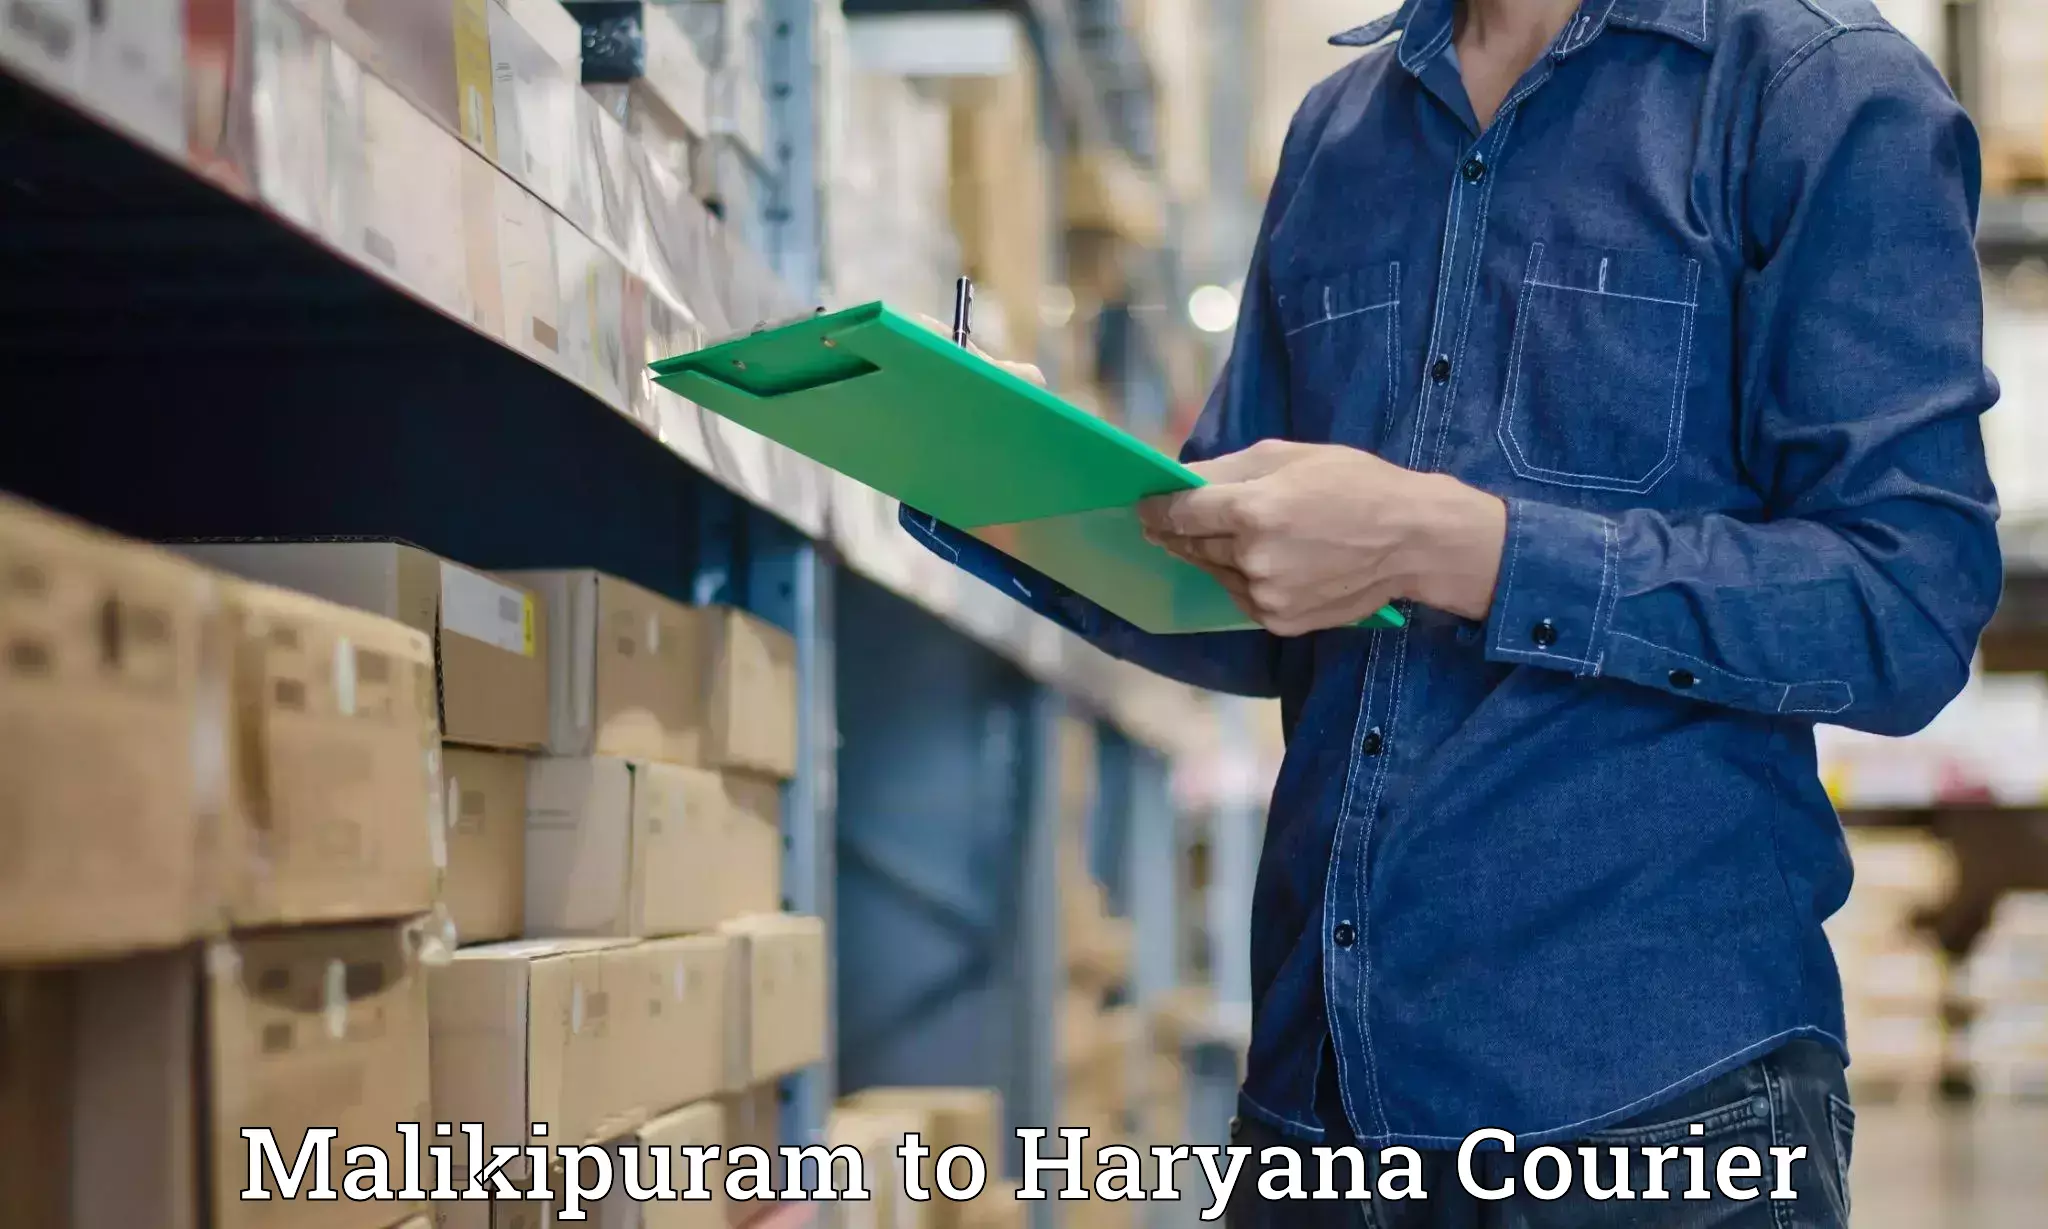 Courier service innovation Malikipuram to Pinjore